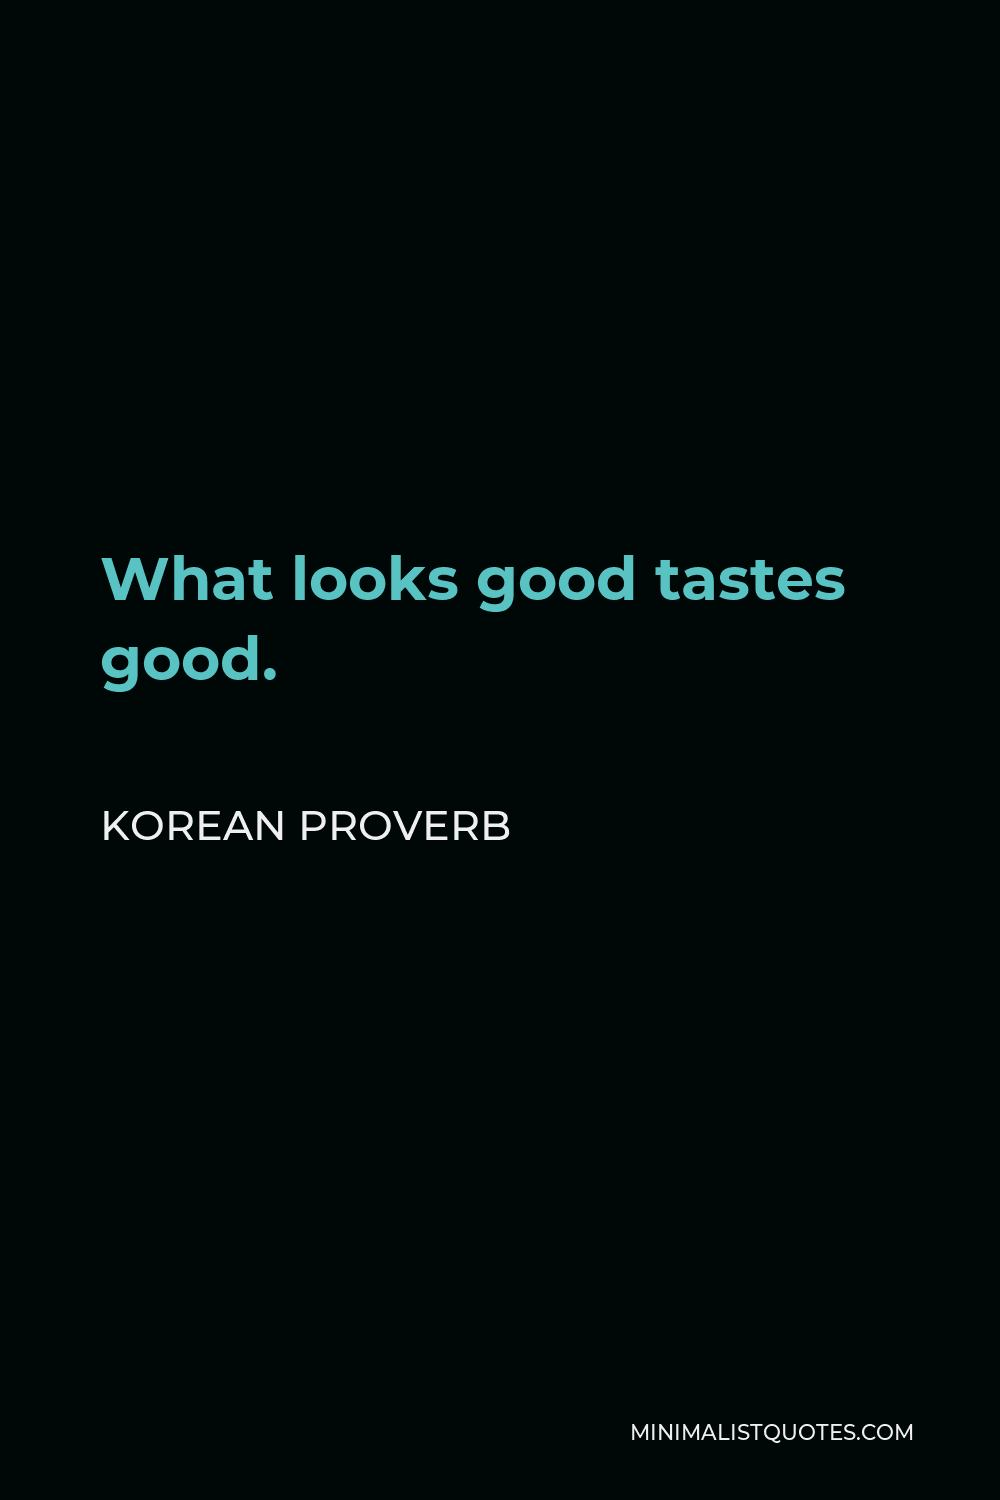 Korean Proverb Quote - What looks good tastes good.